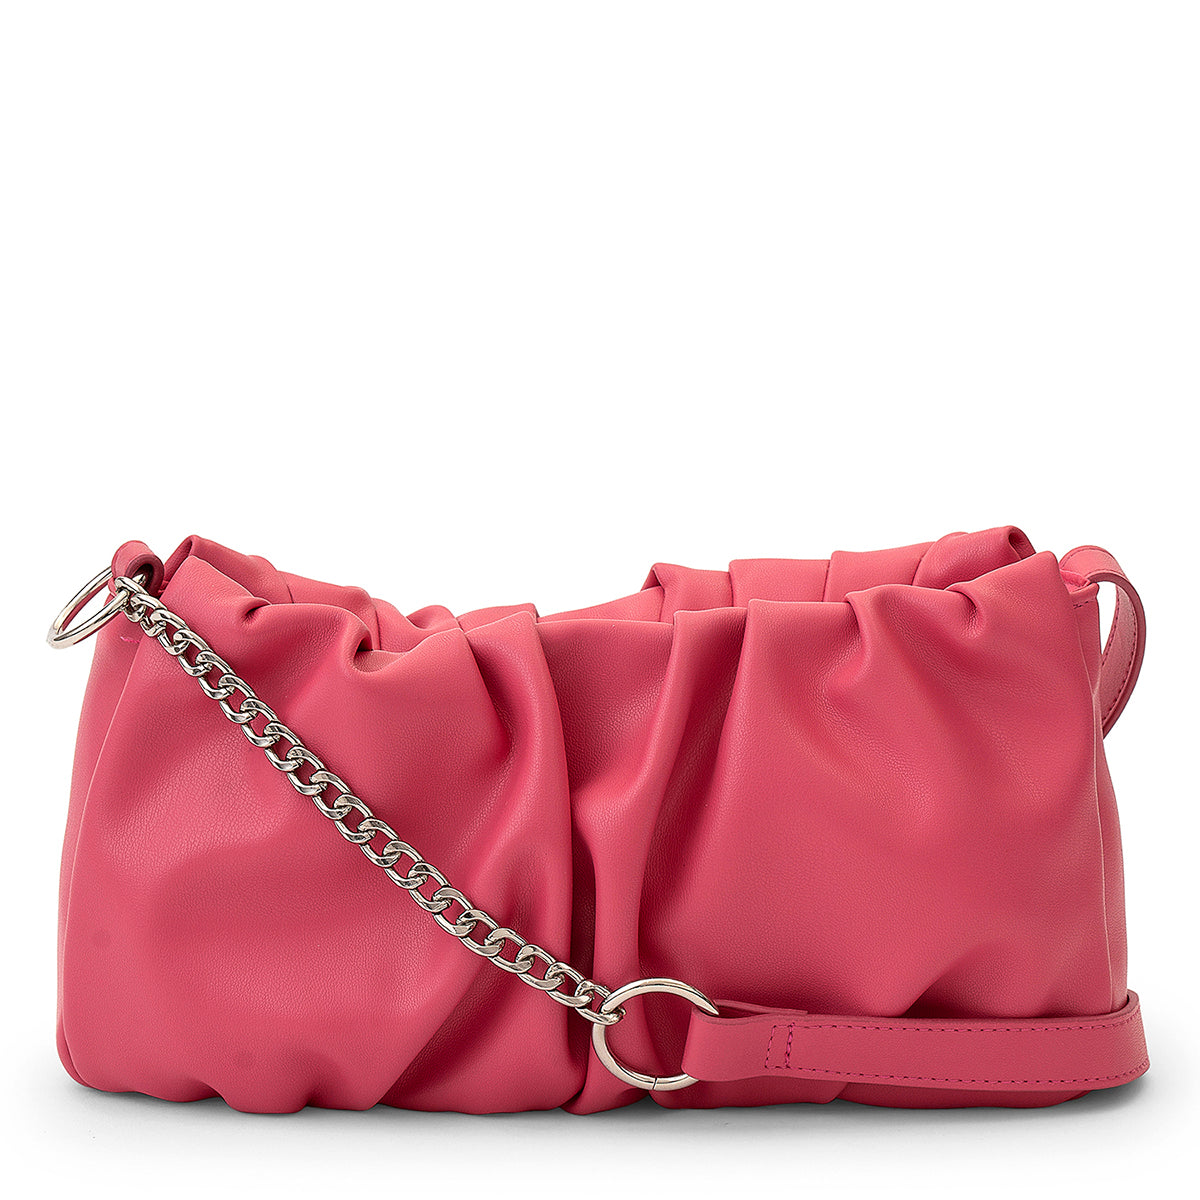 Buy Buckle Handbag 9 Inch Online at Best Prices